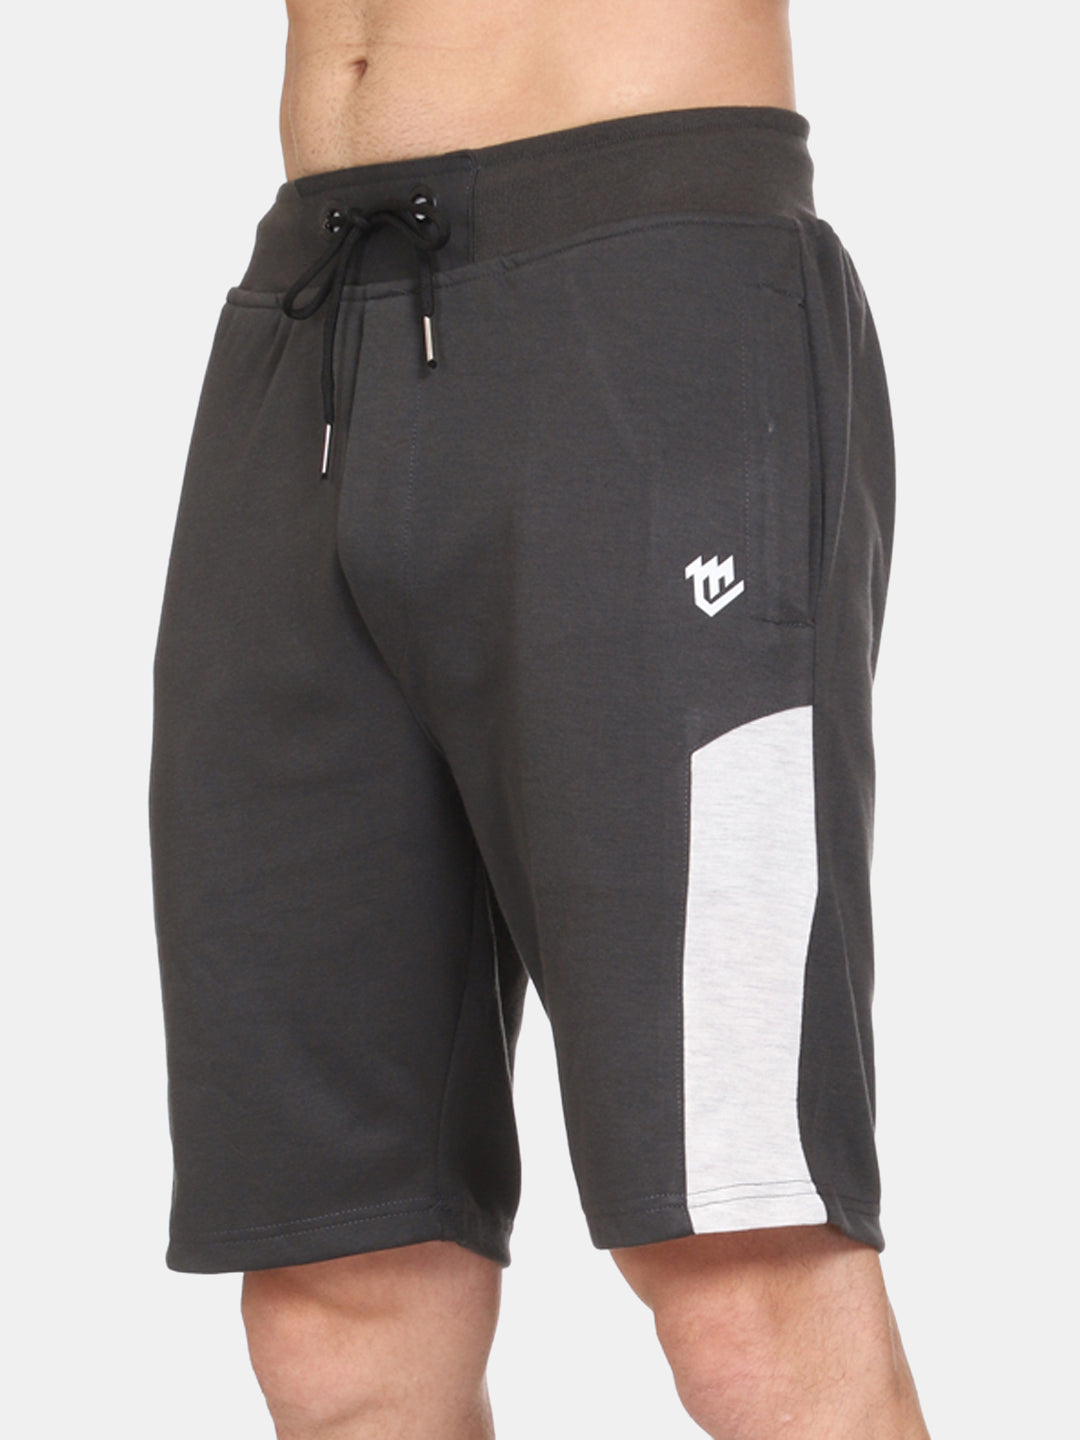 Stylish Charcoal Grey Shorts For Men